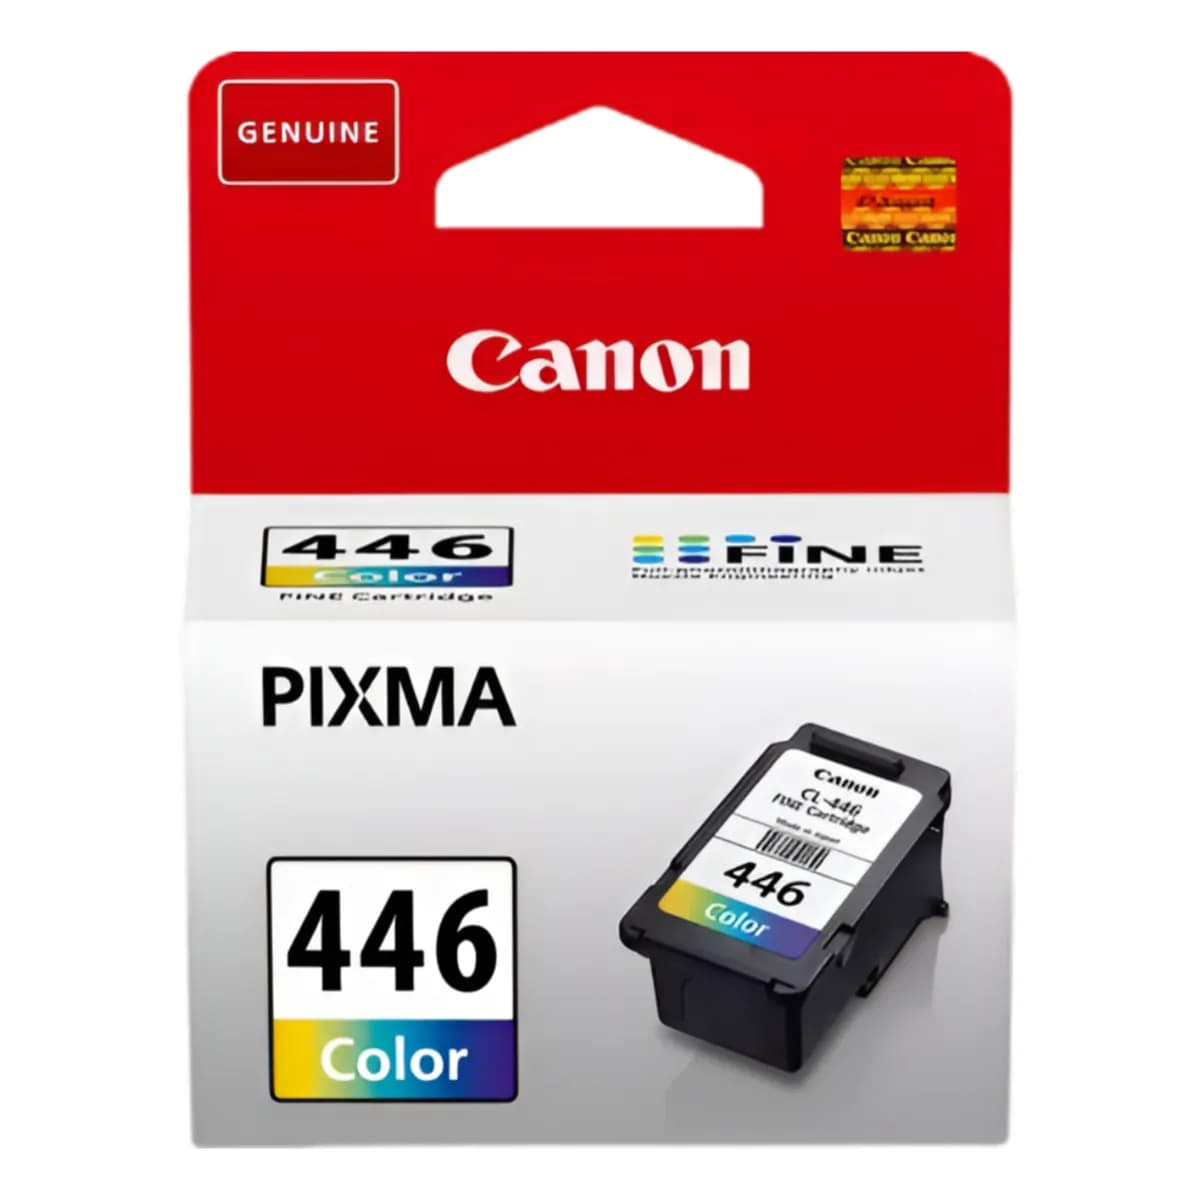 Canon Printer Cartridge CL- 446XL Colour - CGOM33